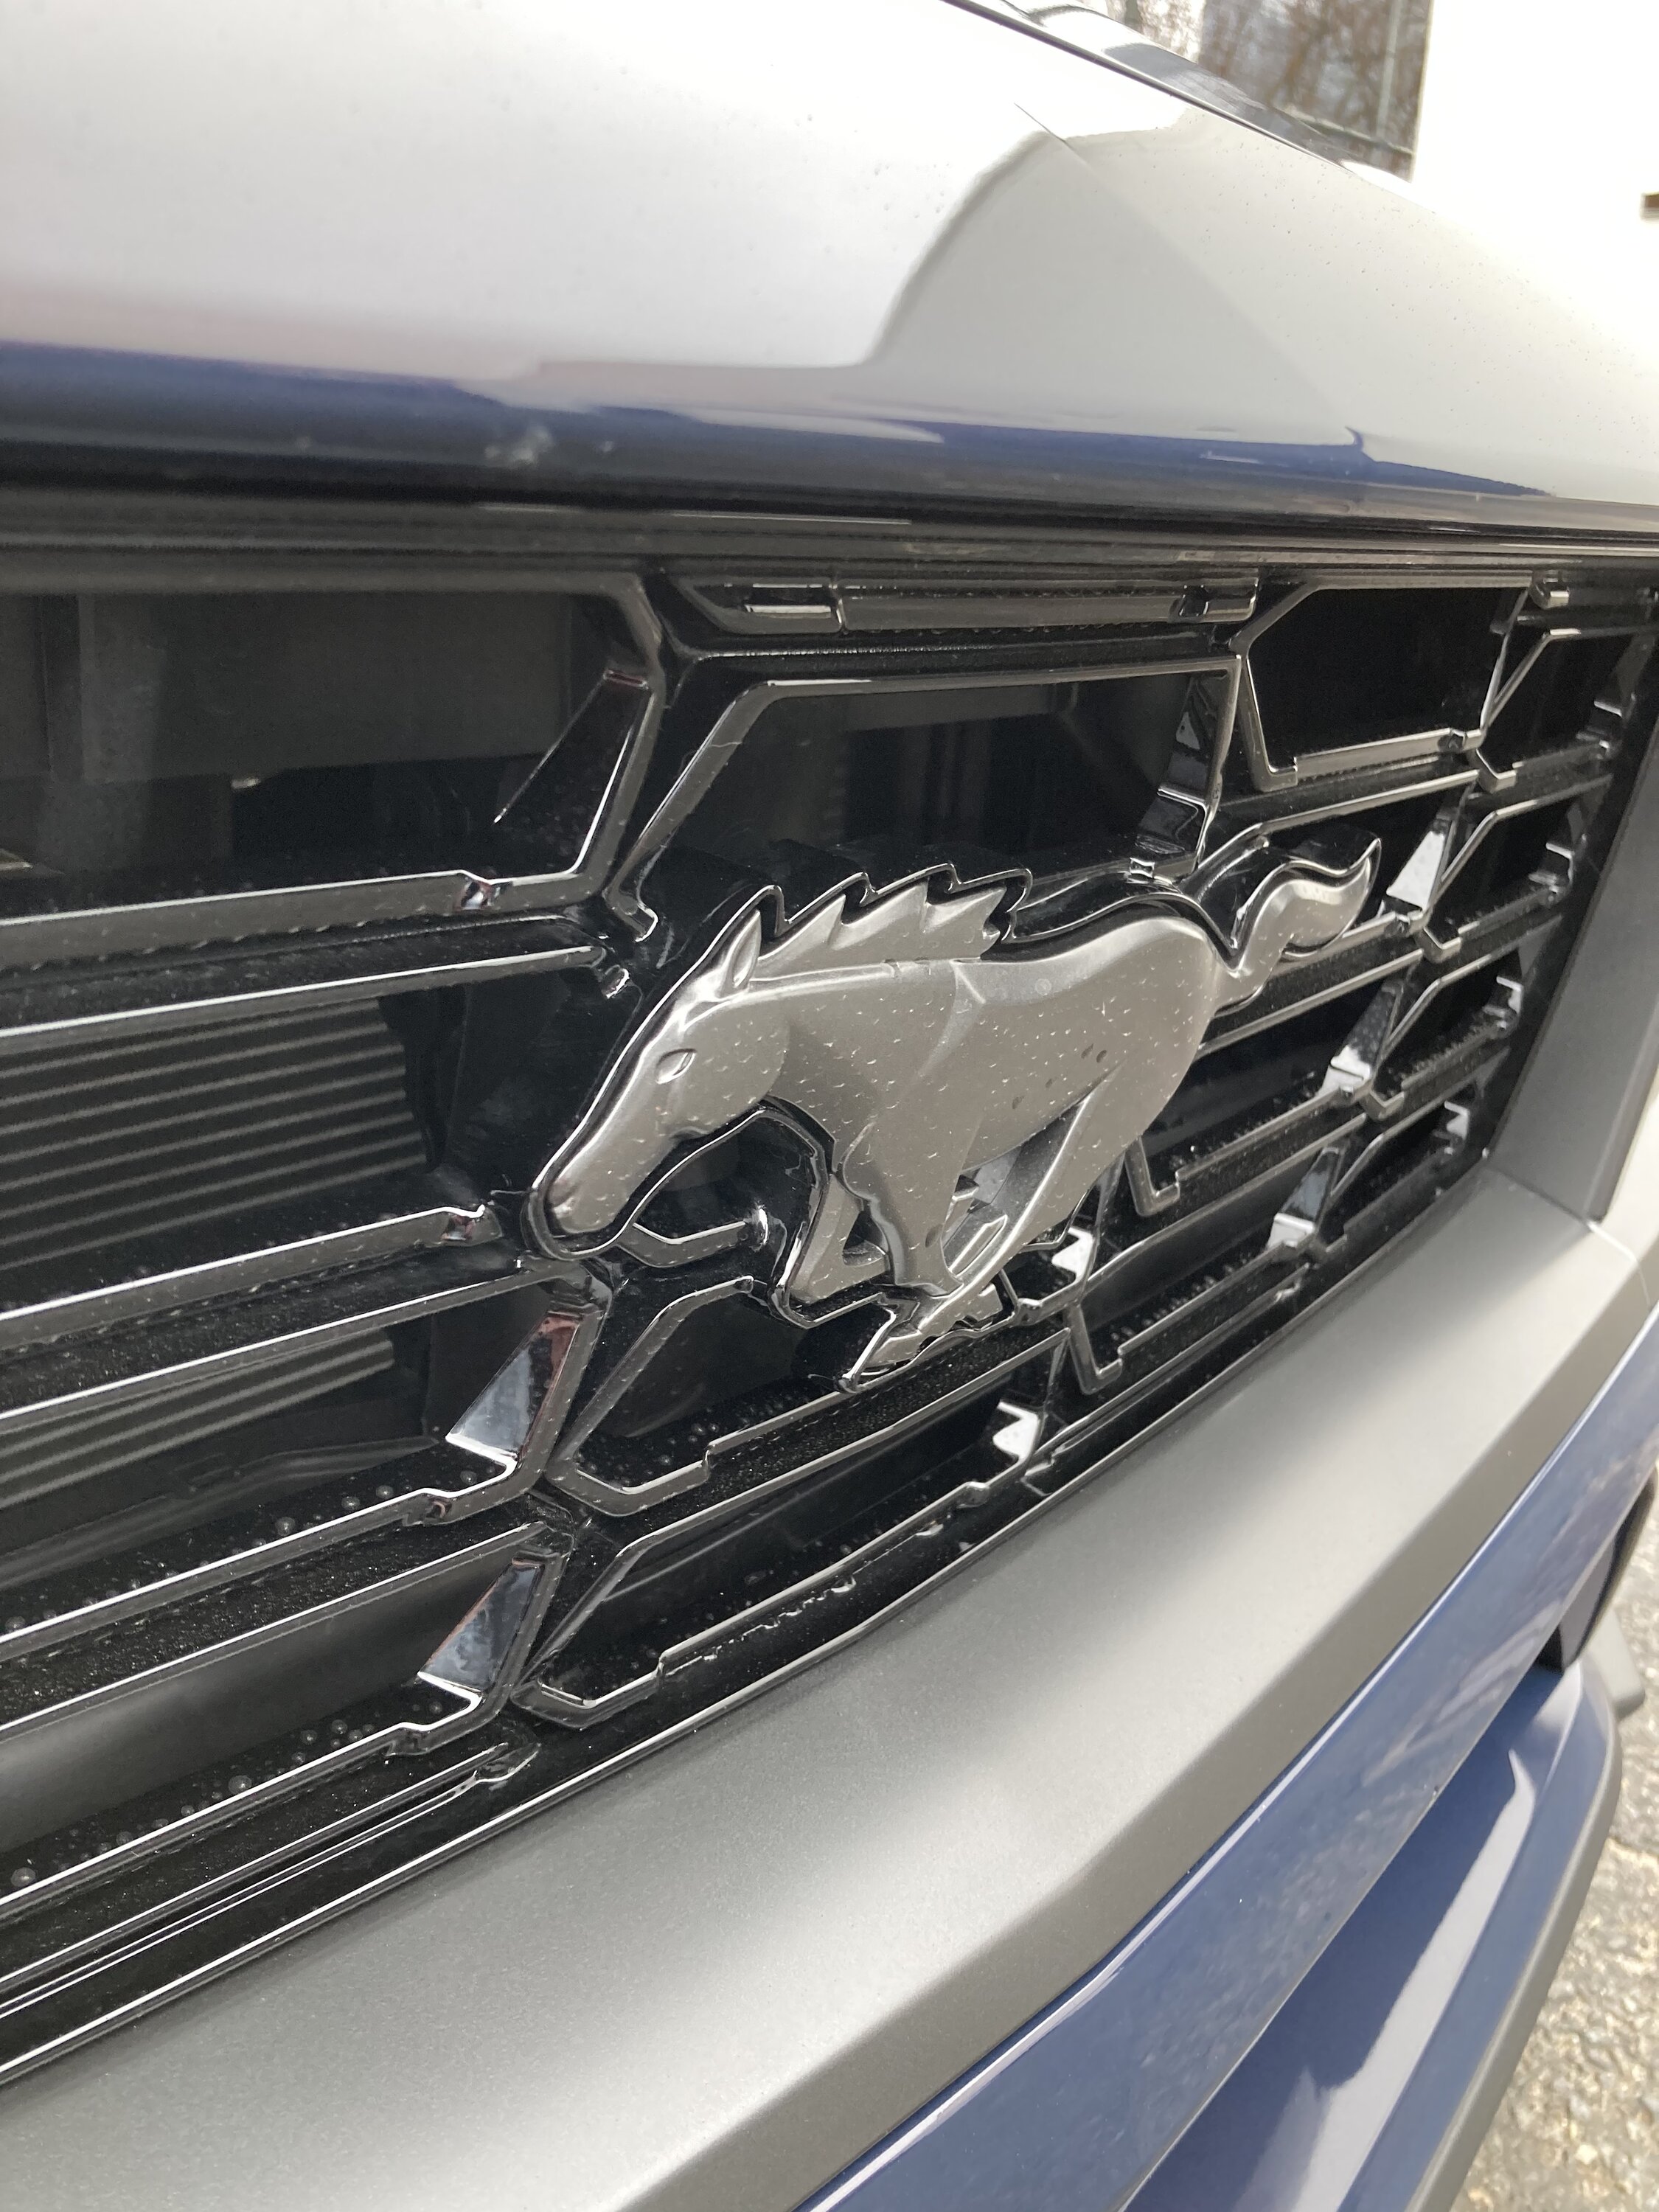 S650 Mustang Video: First Listen of Dark Horse Mustang WOT Driving on Public Roads + Blue Ember / Grabber Blue in Natural Lighting AFCD2EAD-2226-4FD0-BD12-AA221D931530